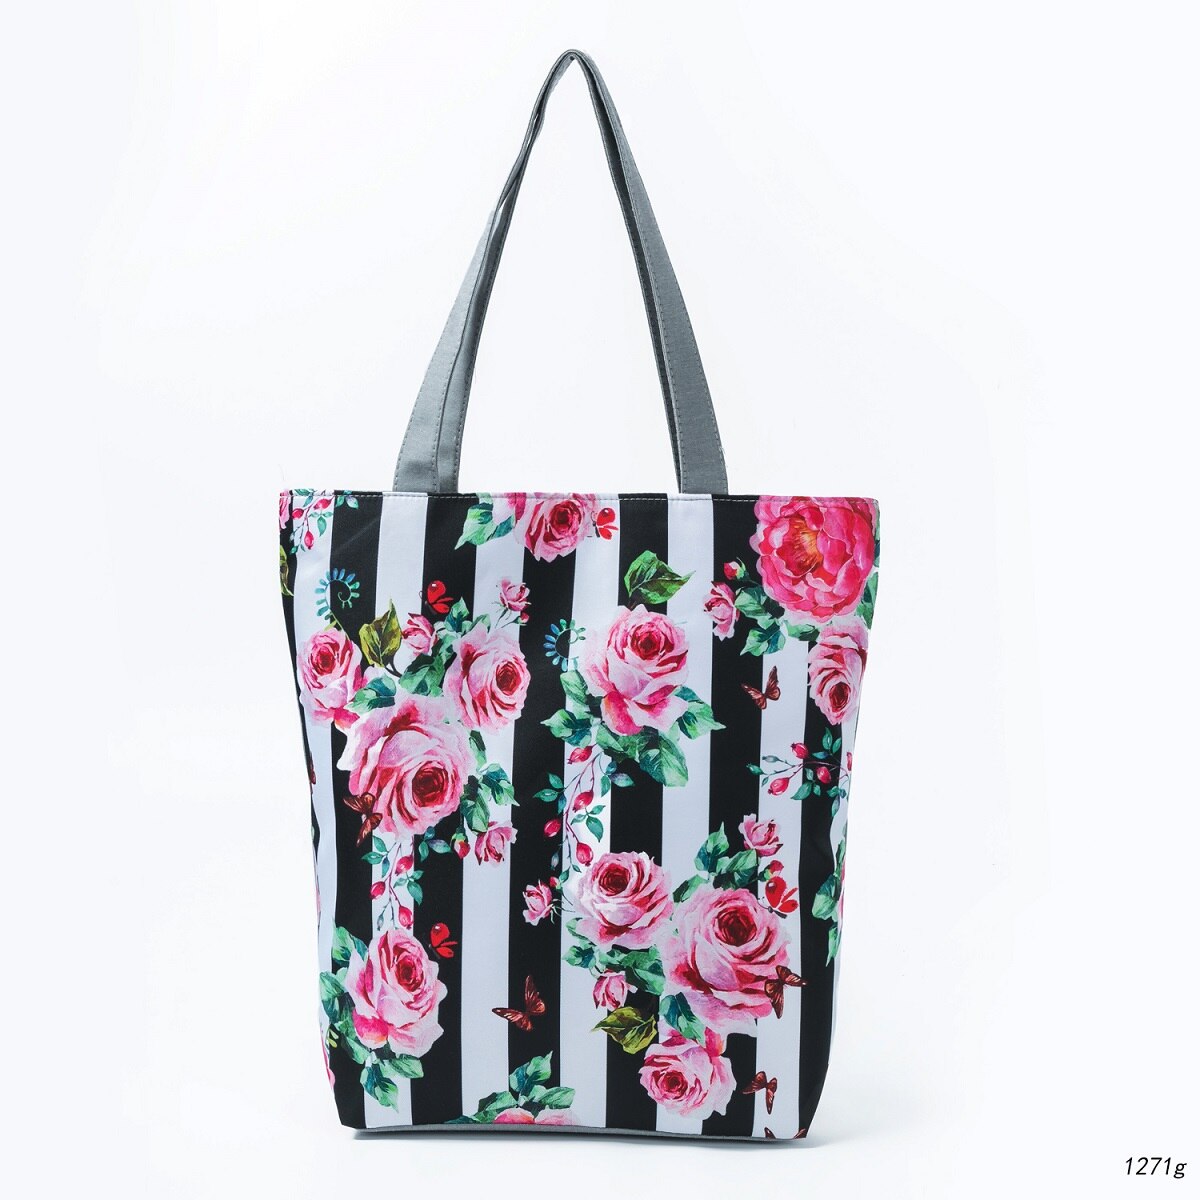 Miyahouse الأزهار المطبوعة حقيبة يد المرأة حقيبة كتف قماش الصيف حقيبة شاطئية الاستخدام اليومي الإناث حقيبة تسوق سيدة